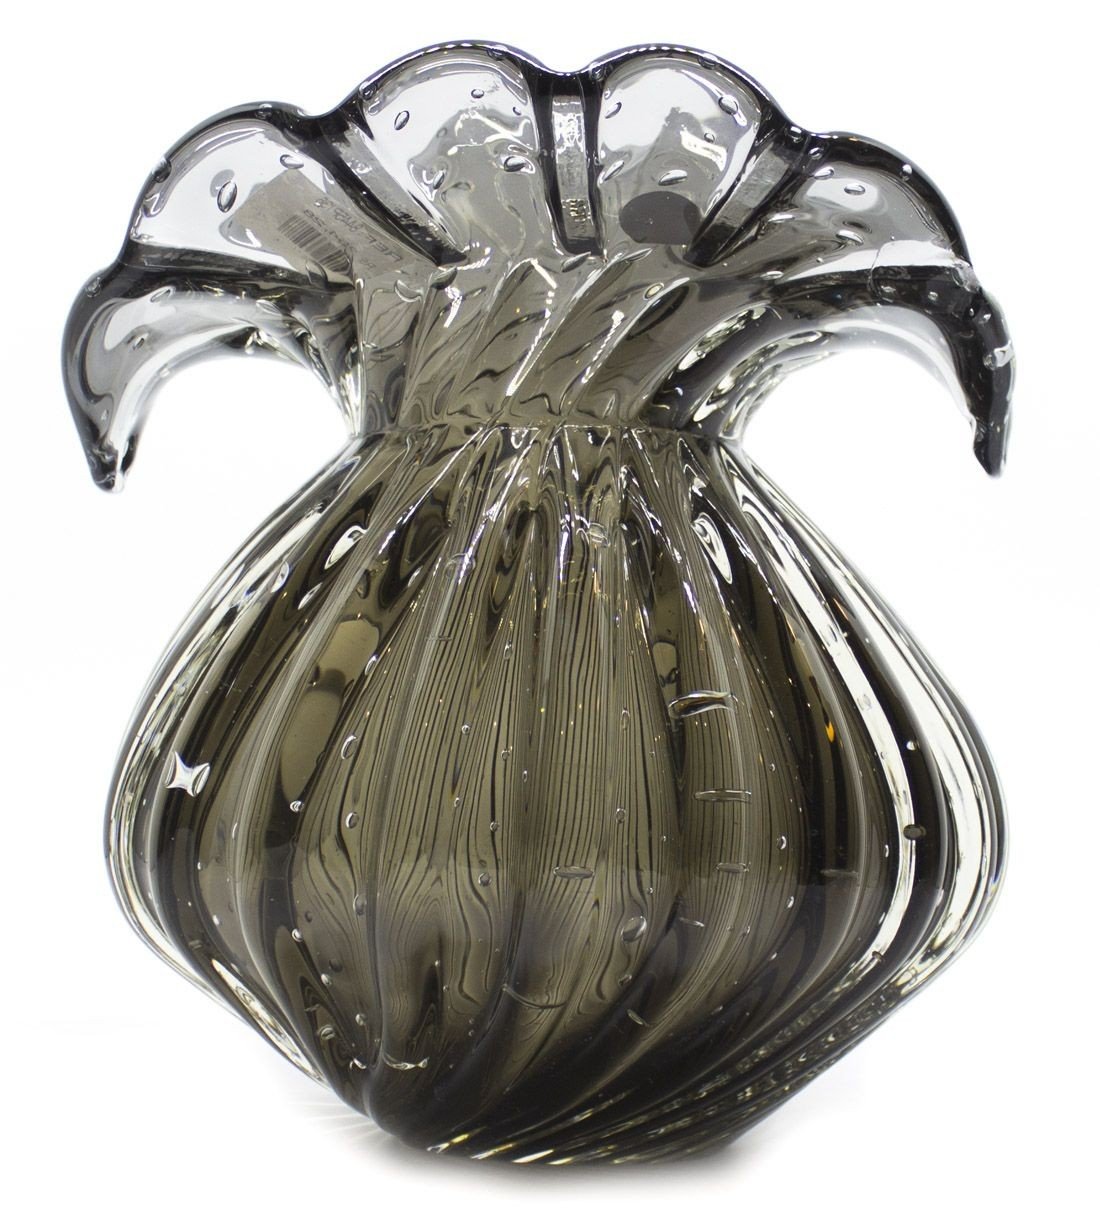 vaso de cristal murano valencia p grafite fume sob encomenda 20876100 1 20181210150705